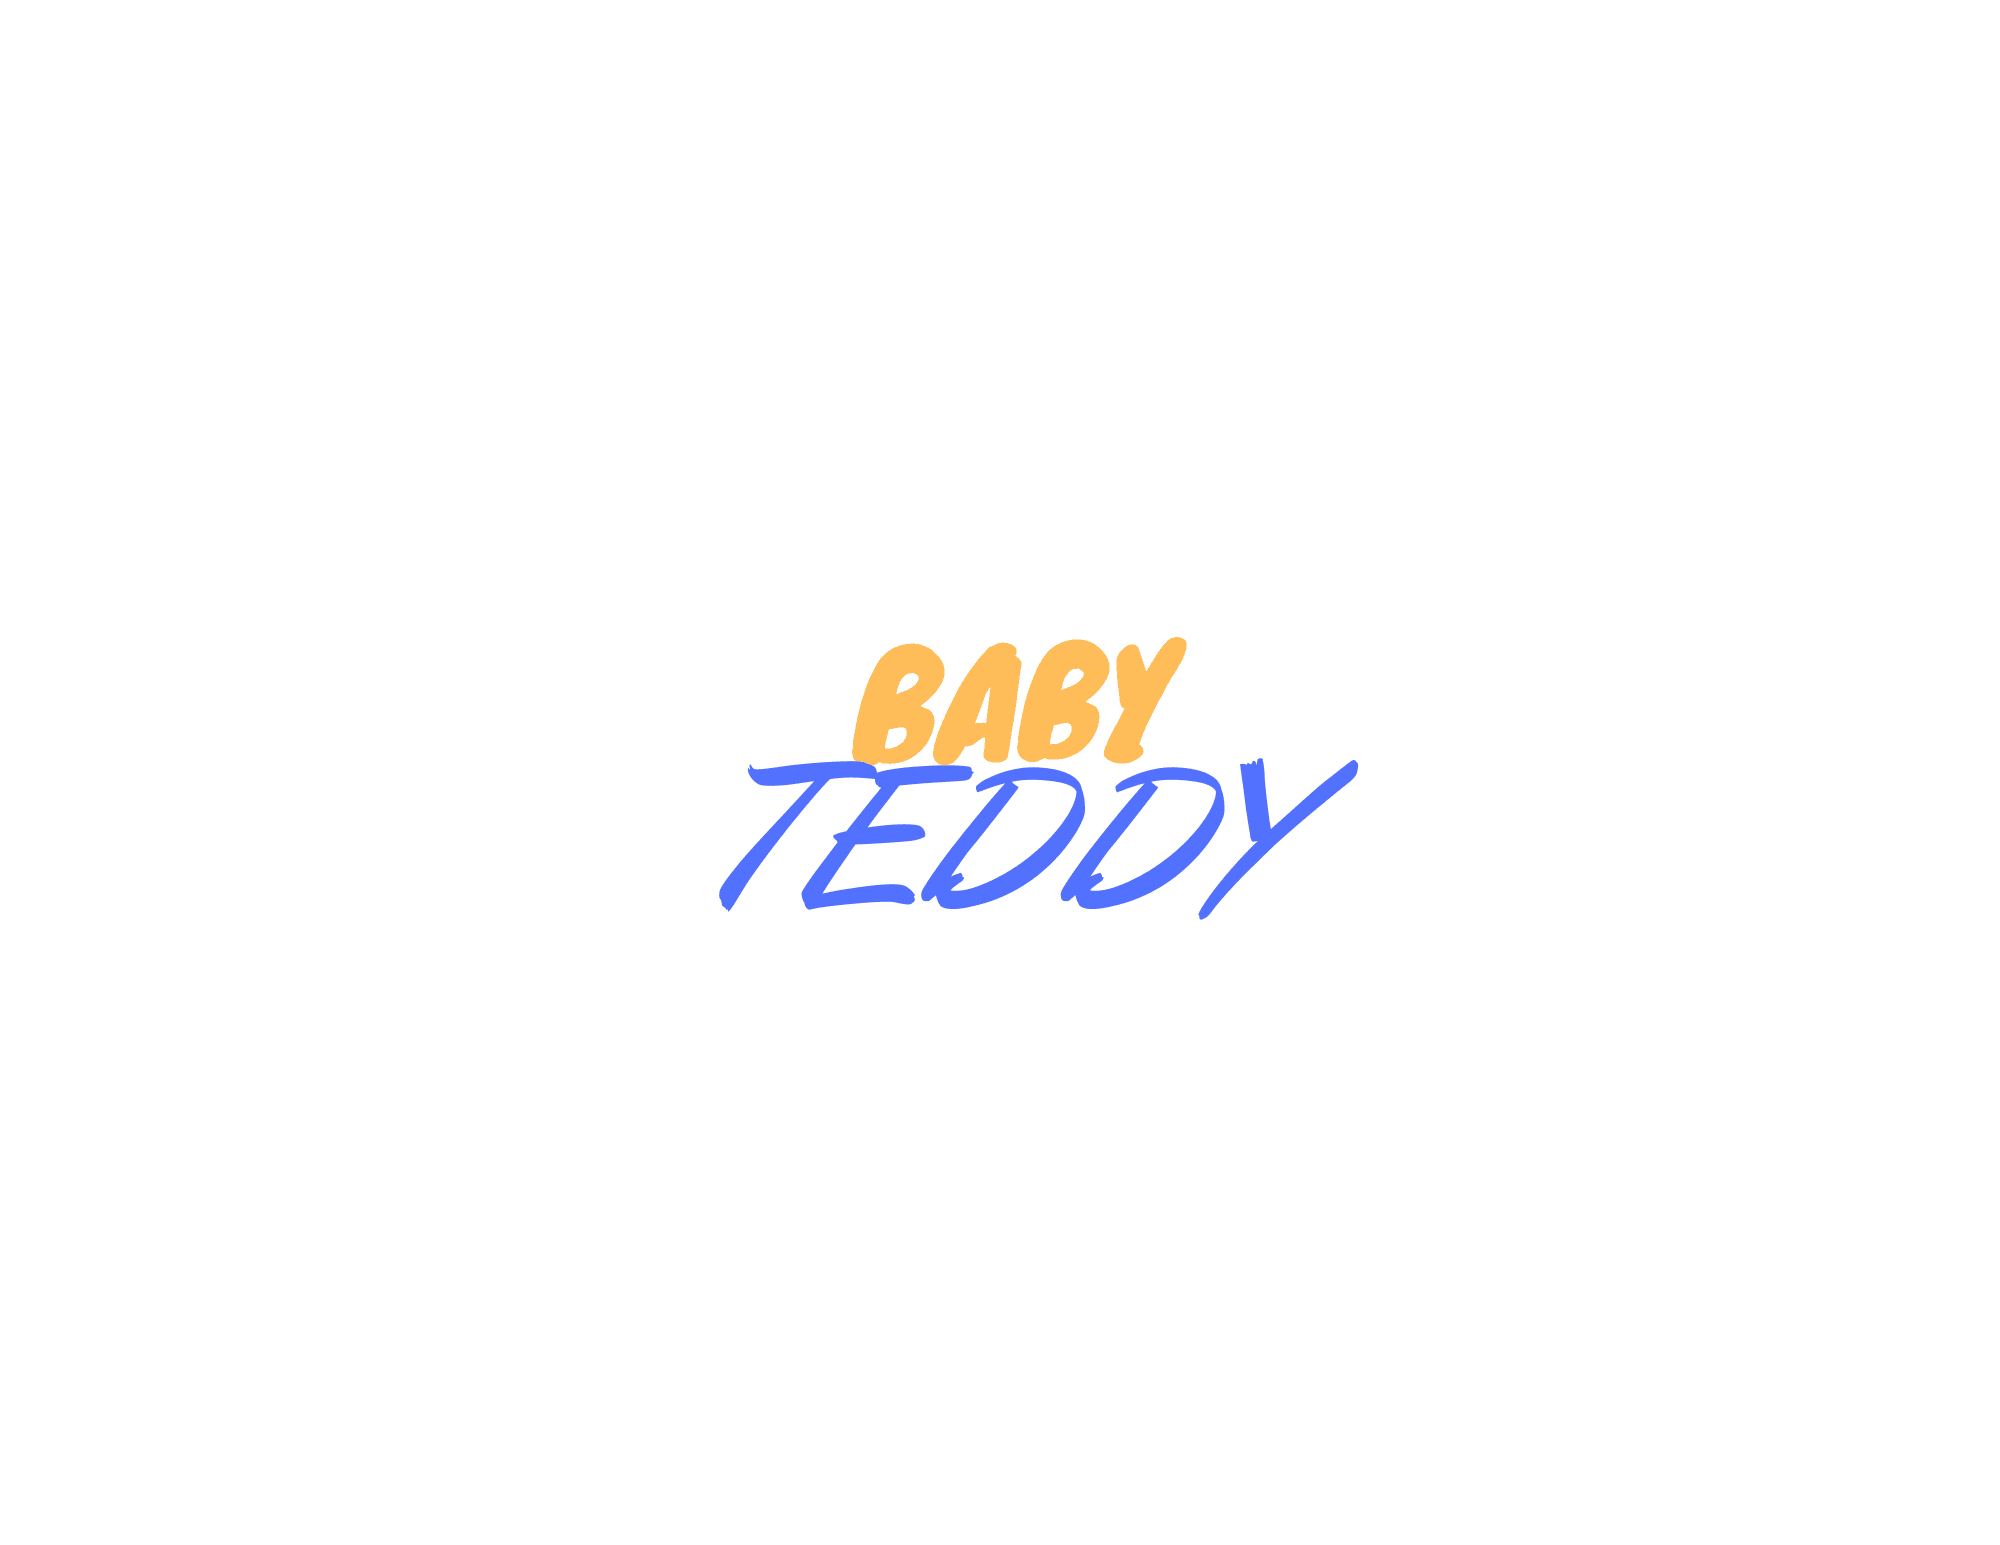 Baby_TEDDY Banner